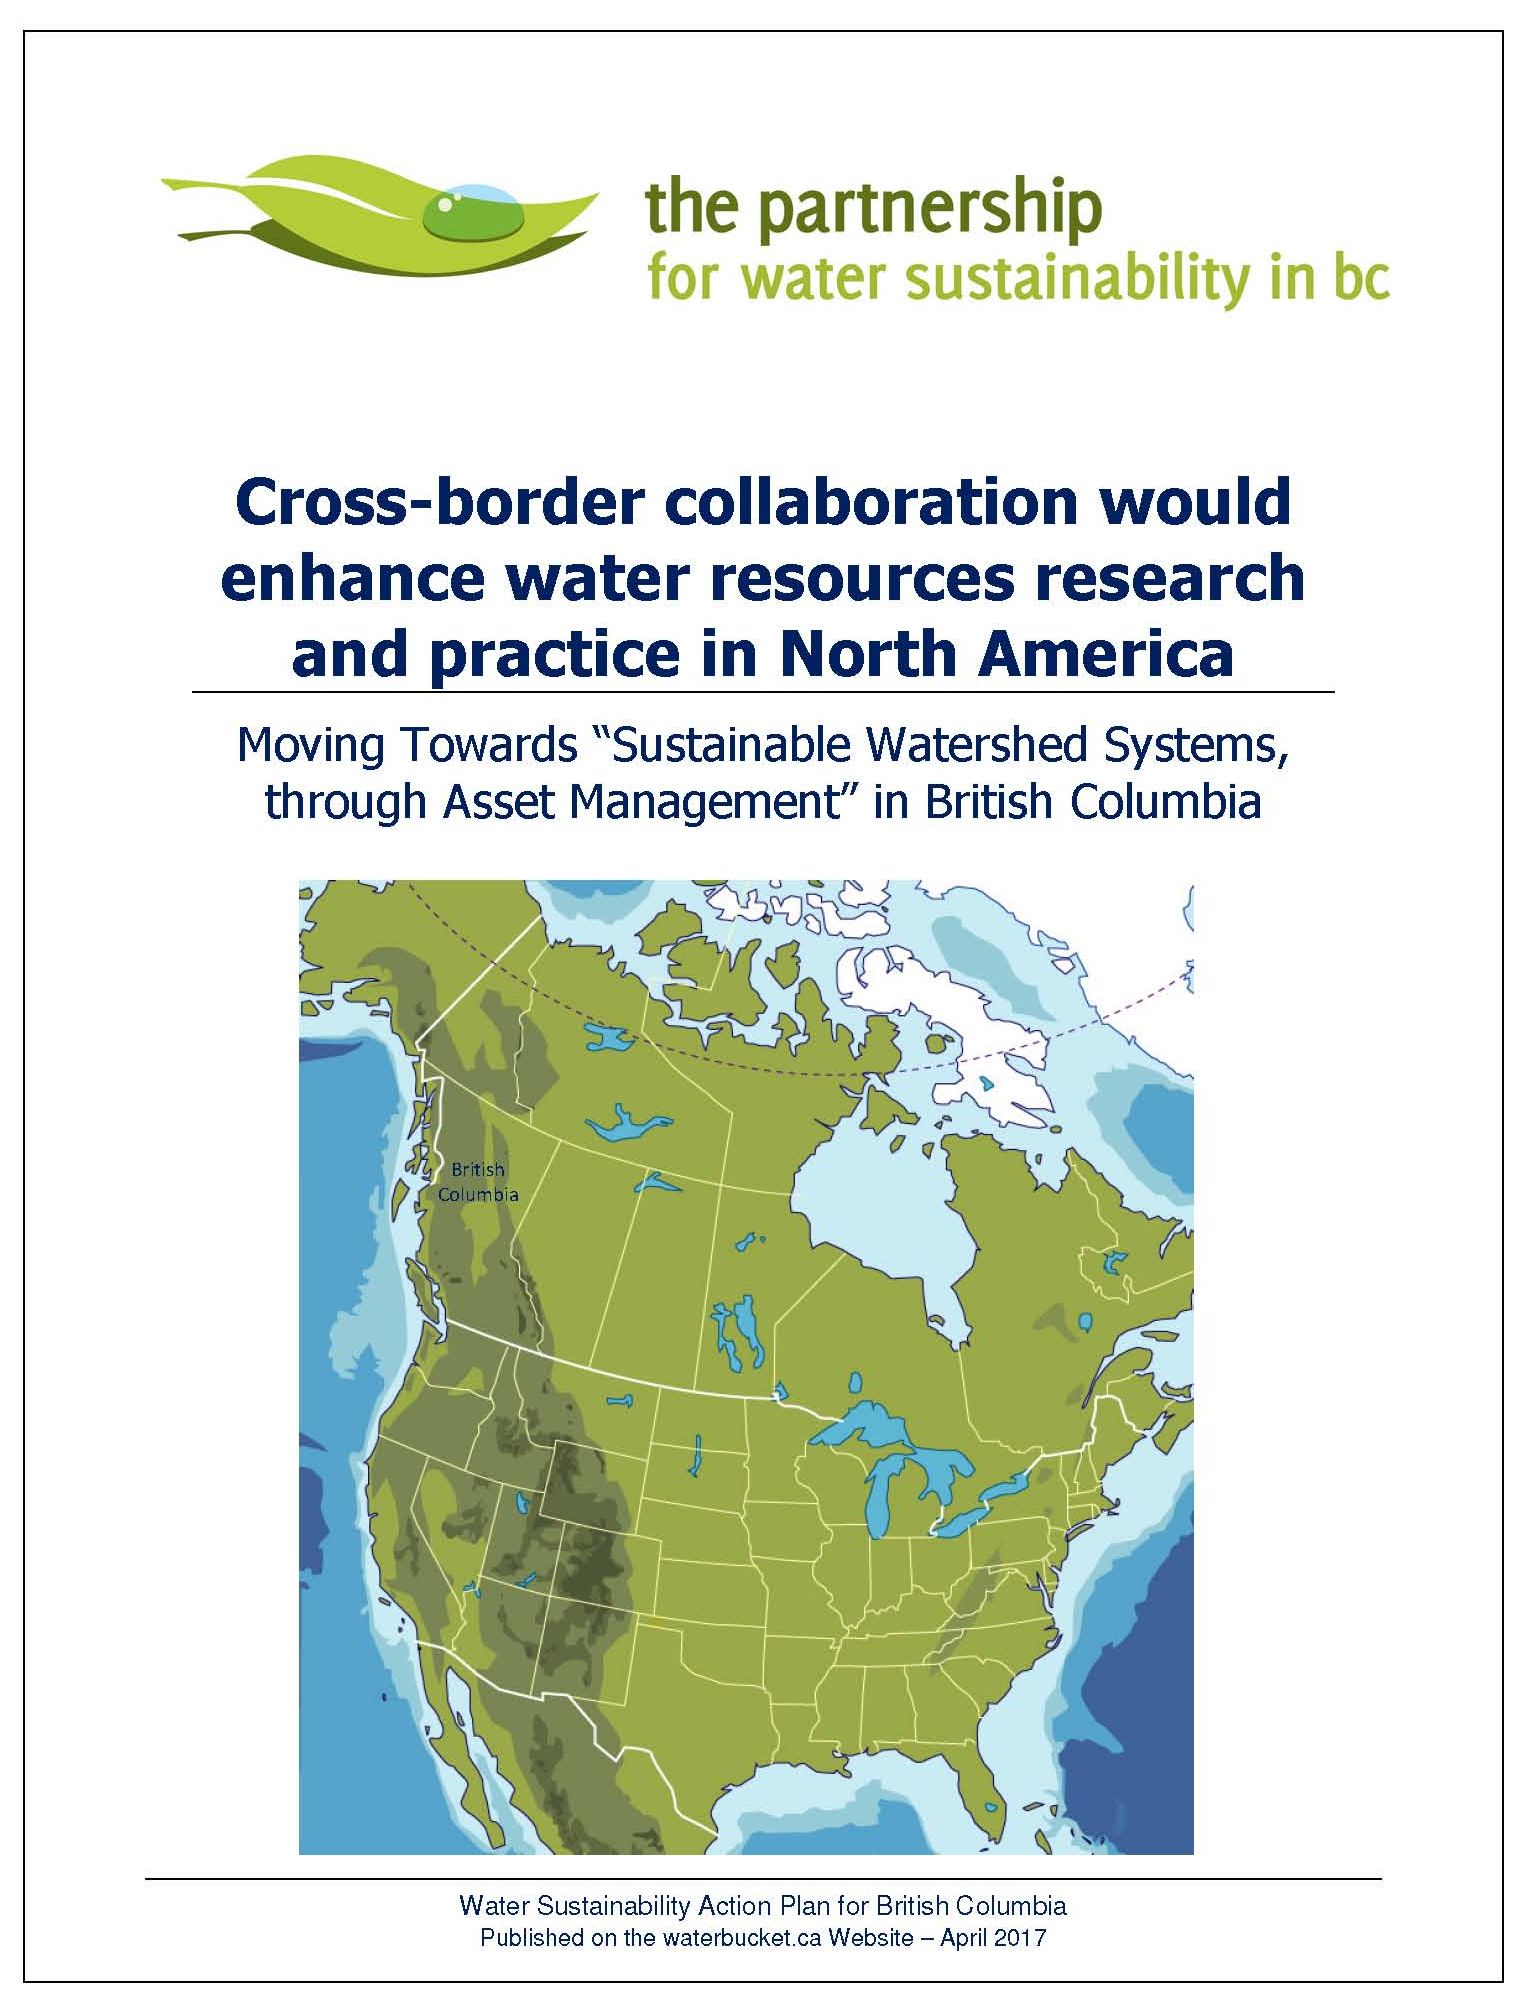 PWSBC_Collaboration-Enhances-Water-Resources-Practice_Apr2017_cover